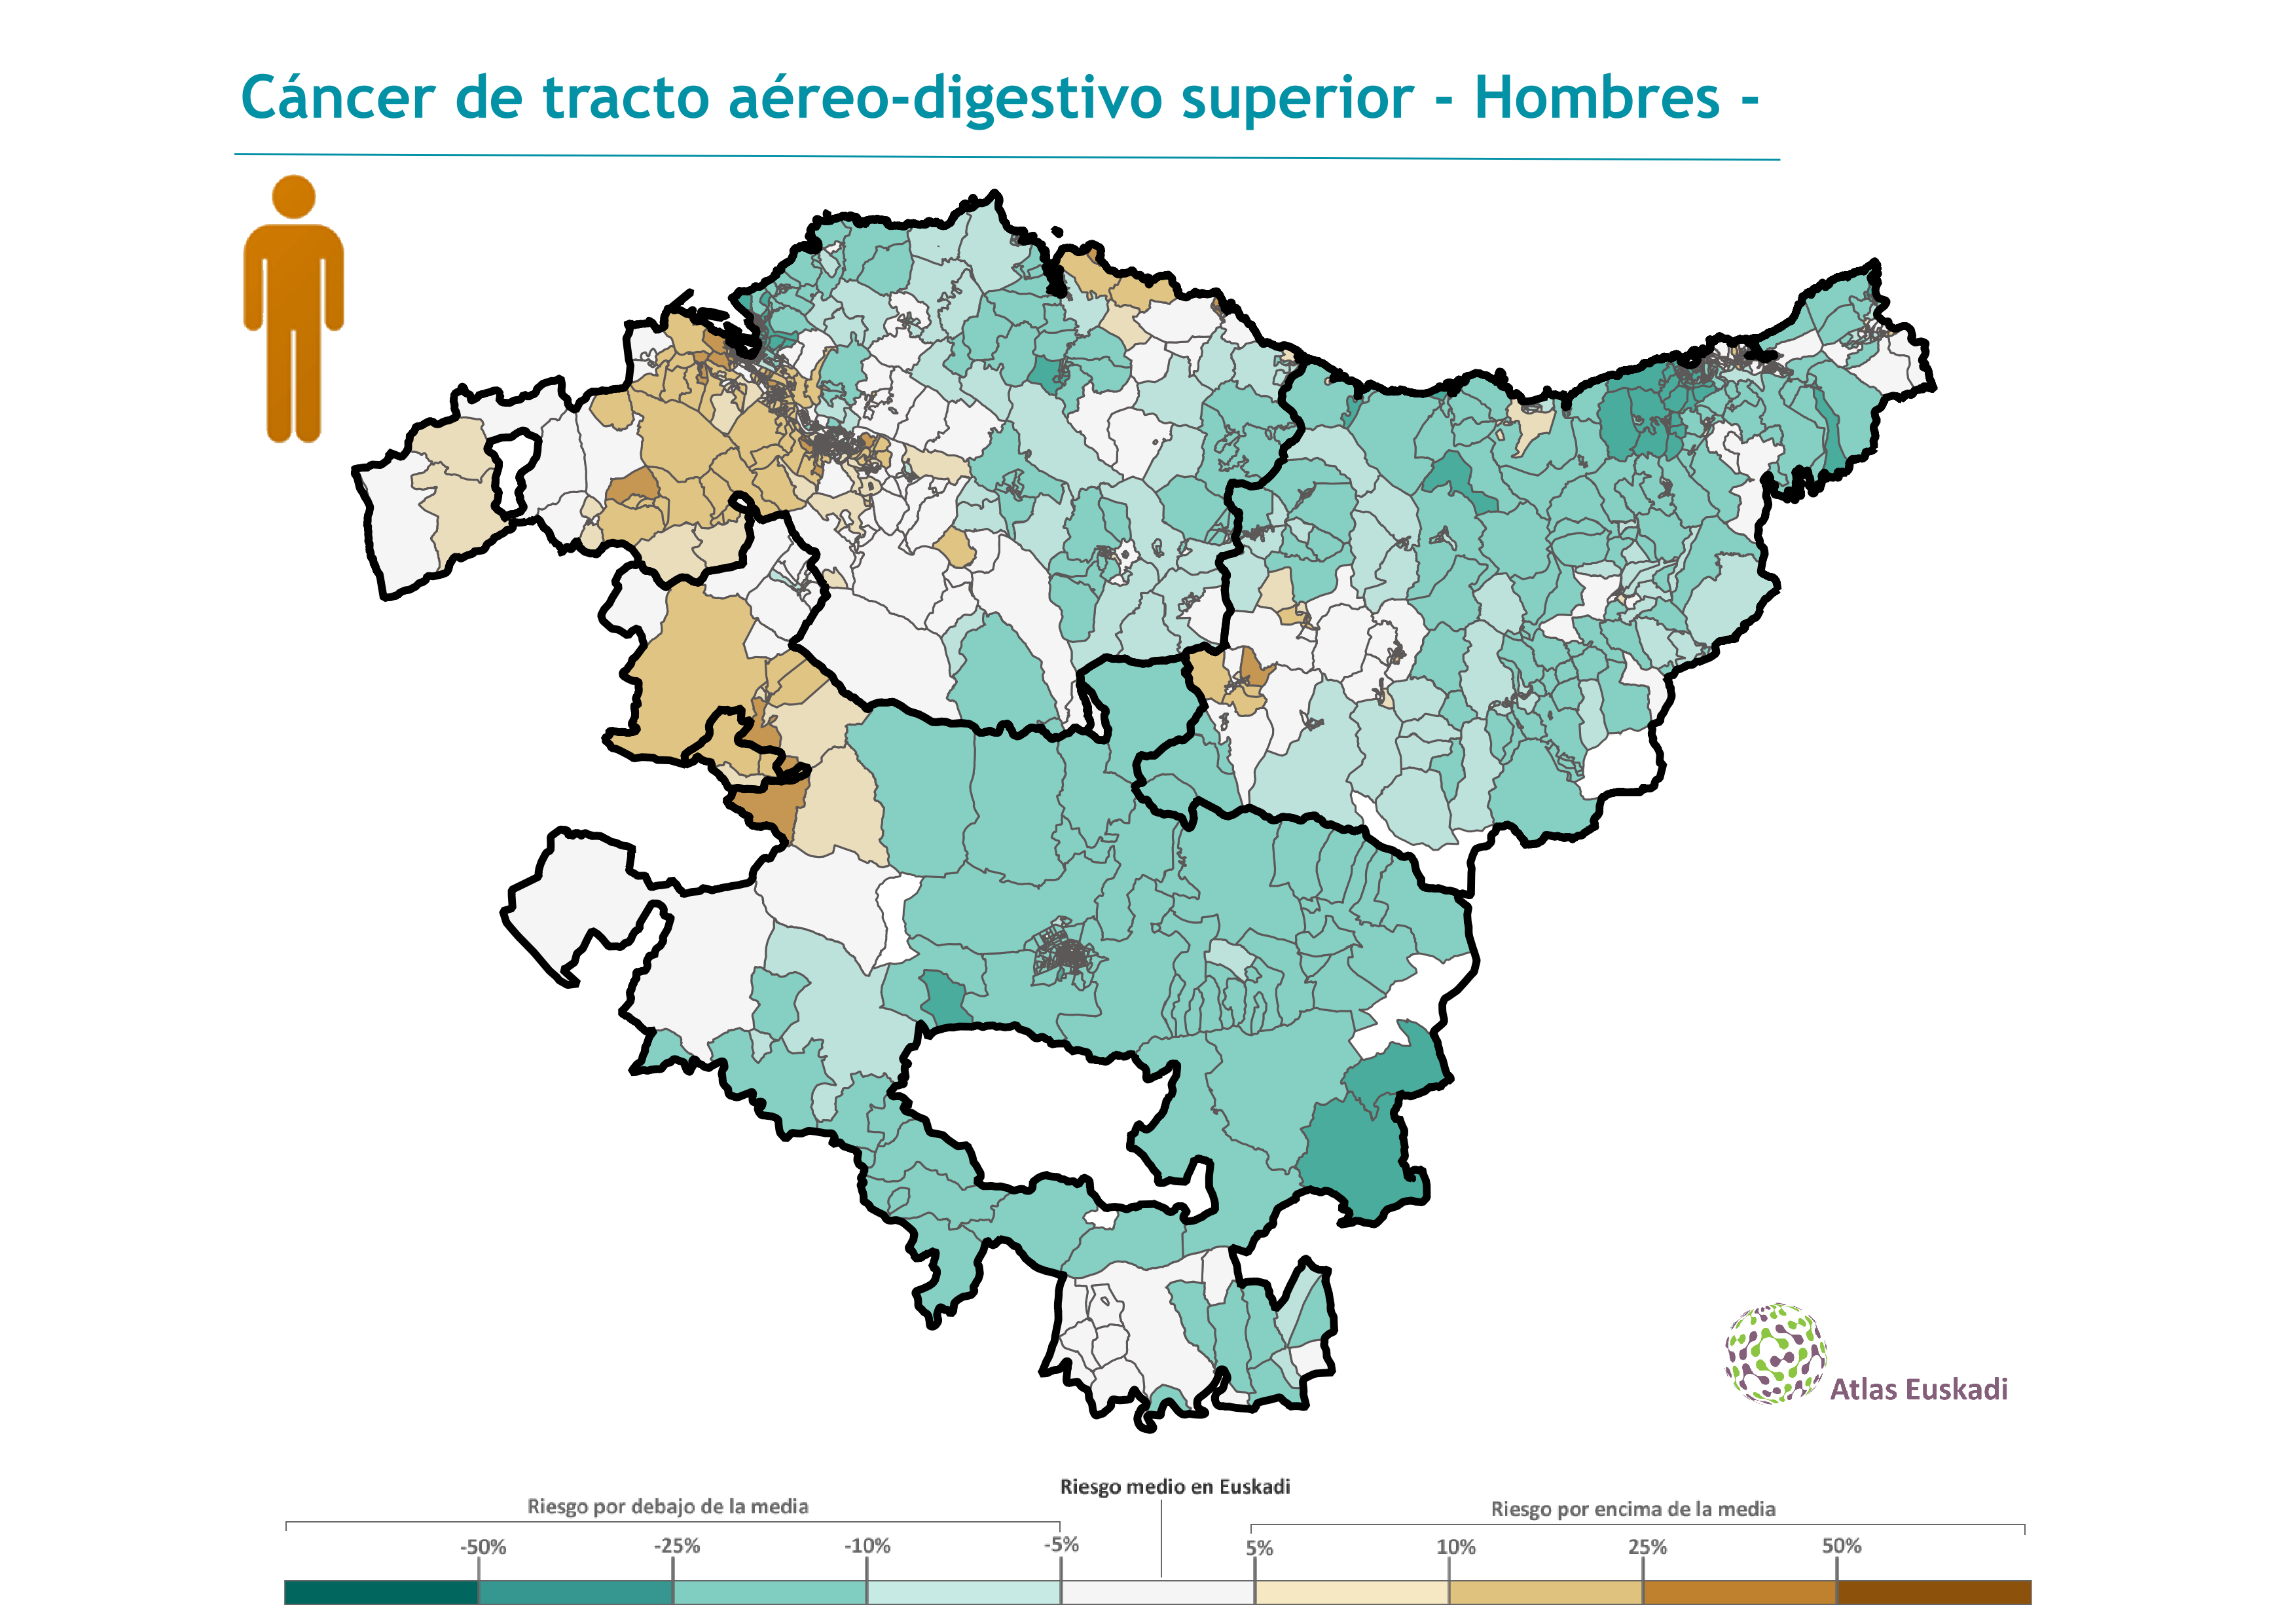 Cáncer de tracto aéreo-digestivo superior hombres  2008-2012 Euskadi